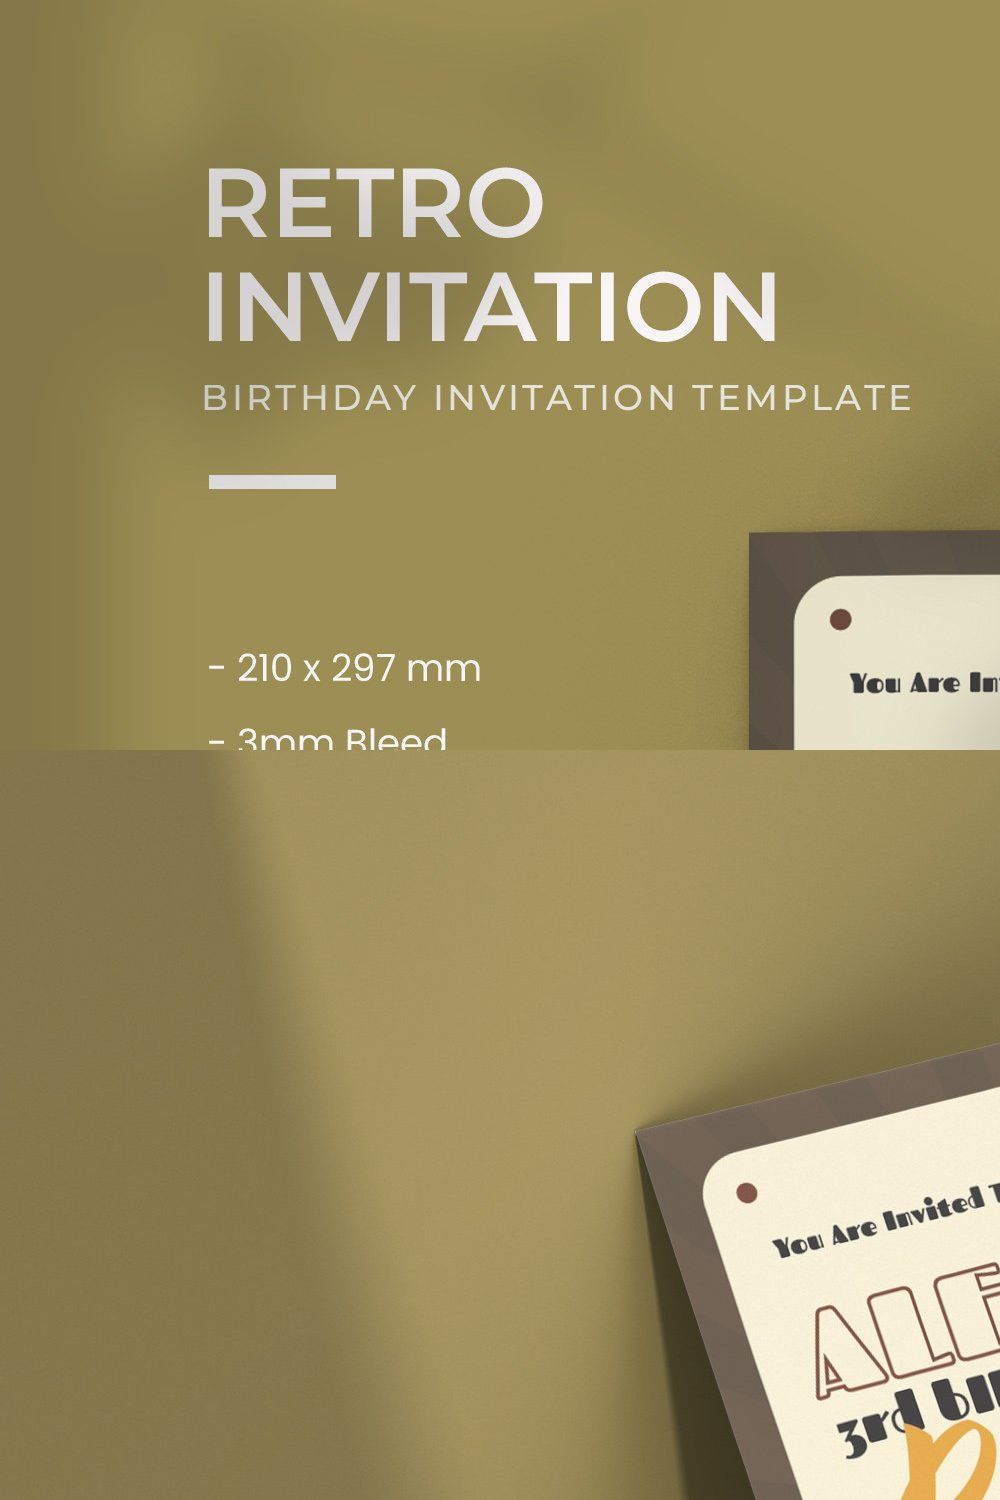 Retro - Birthday Invitation pinterest preview image.